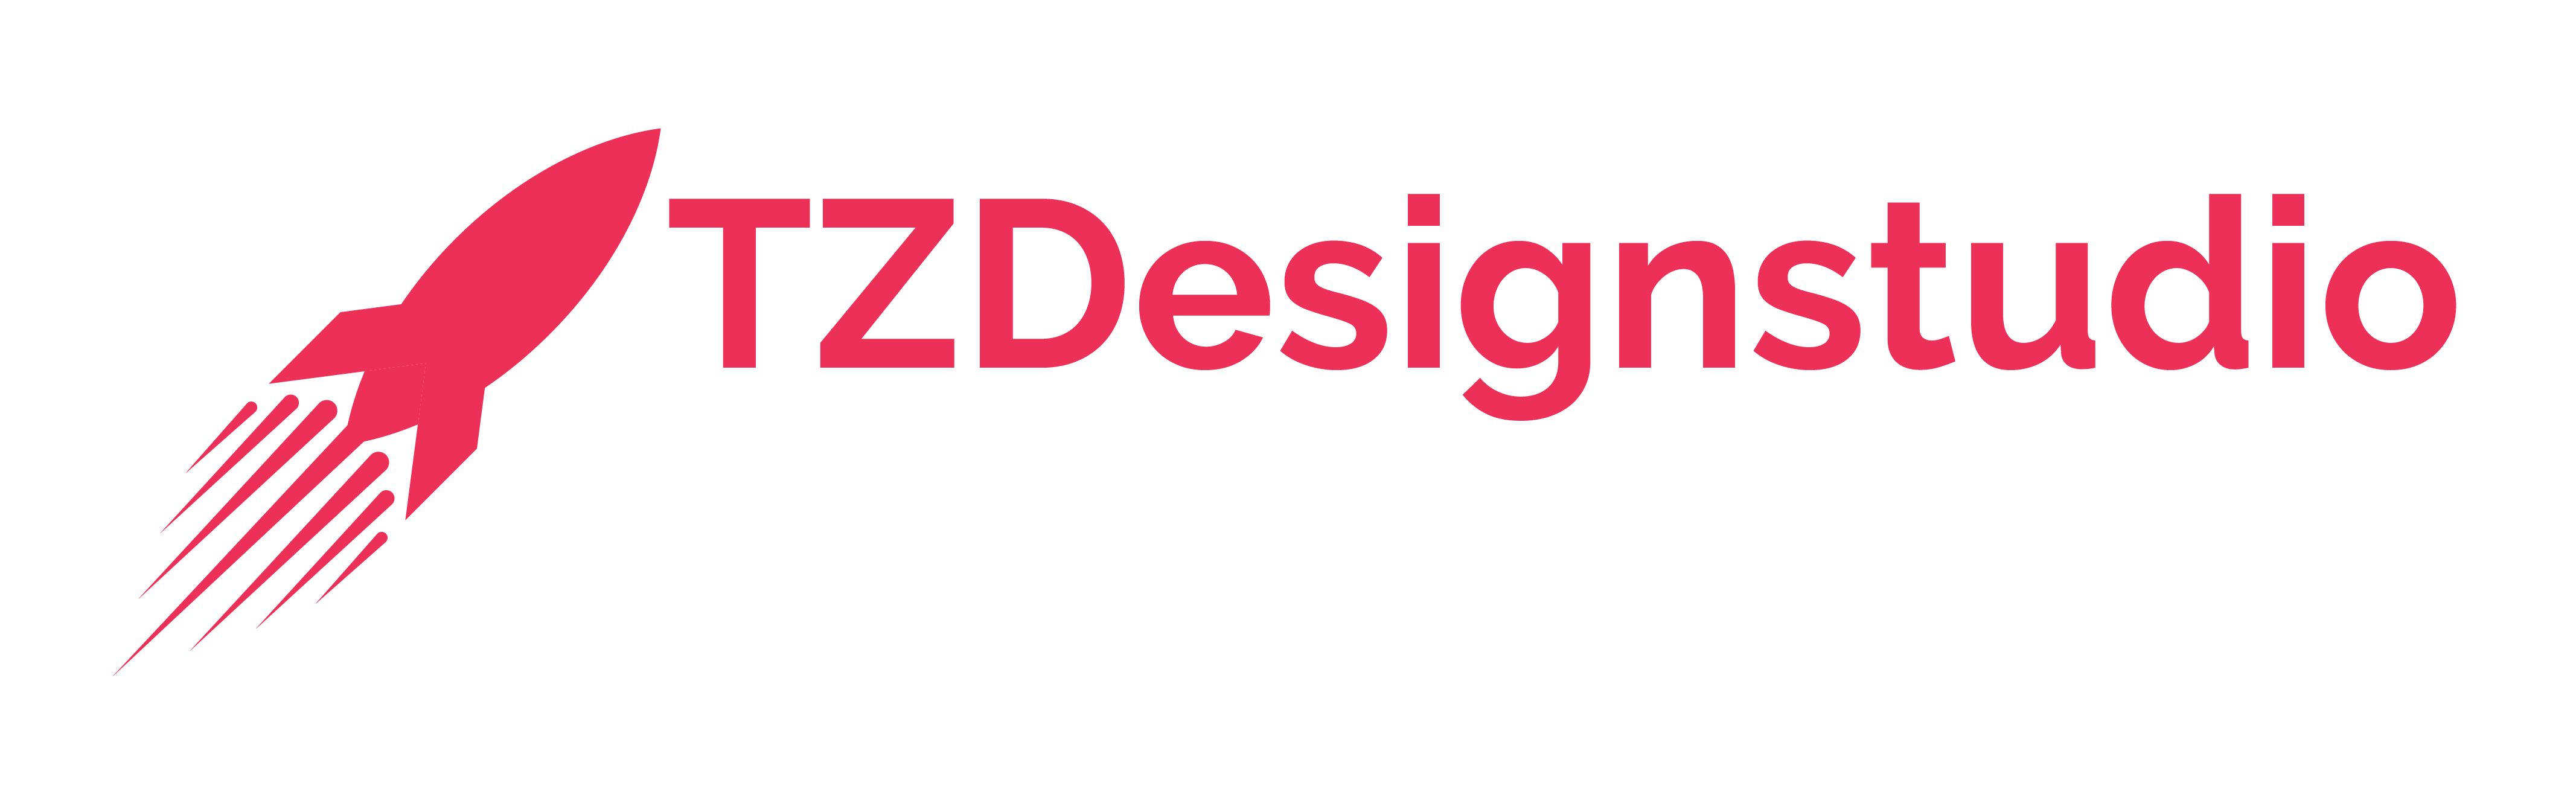 TZDesignstudio Lake Grove, NY Logo